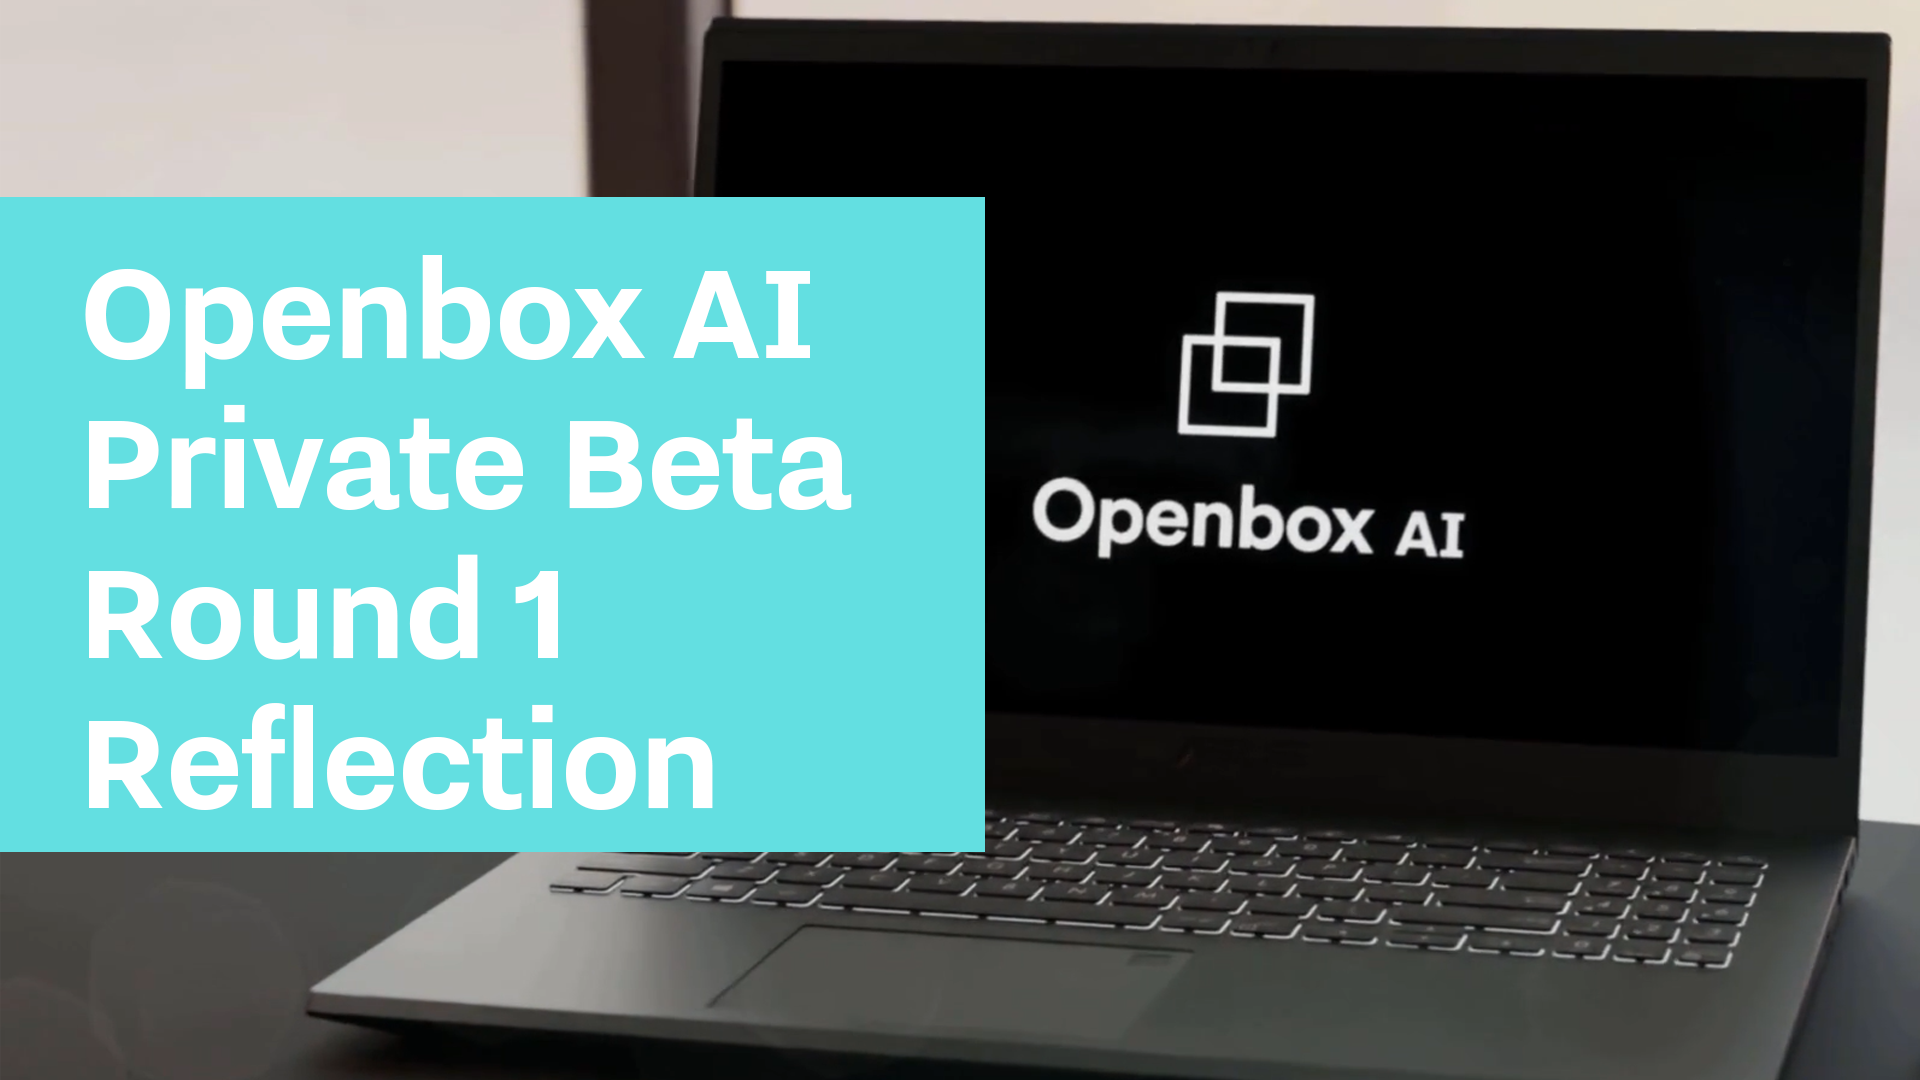 Openbox AI Private Beta Round 1 Reflection